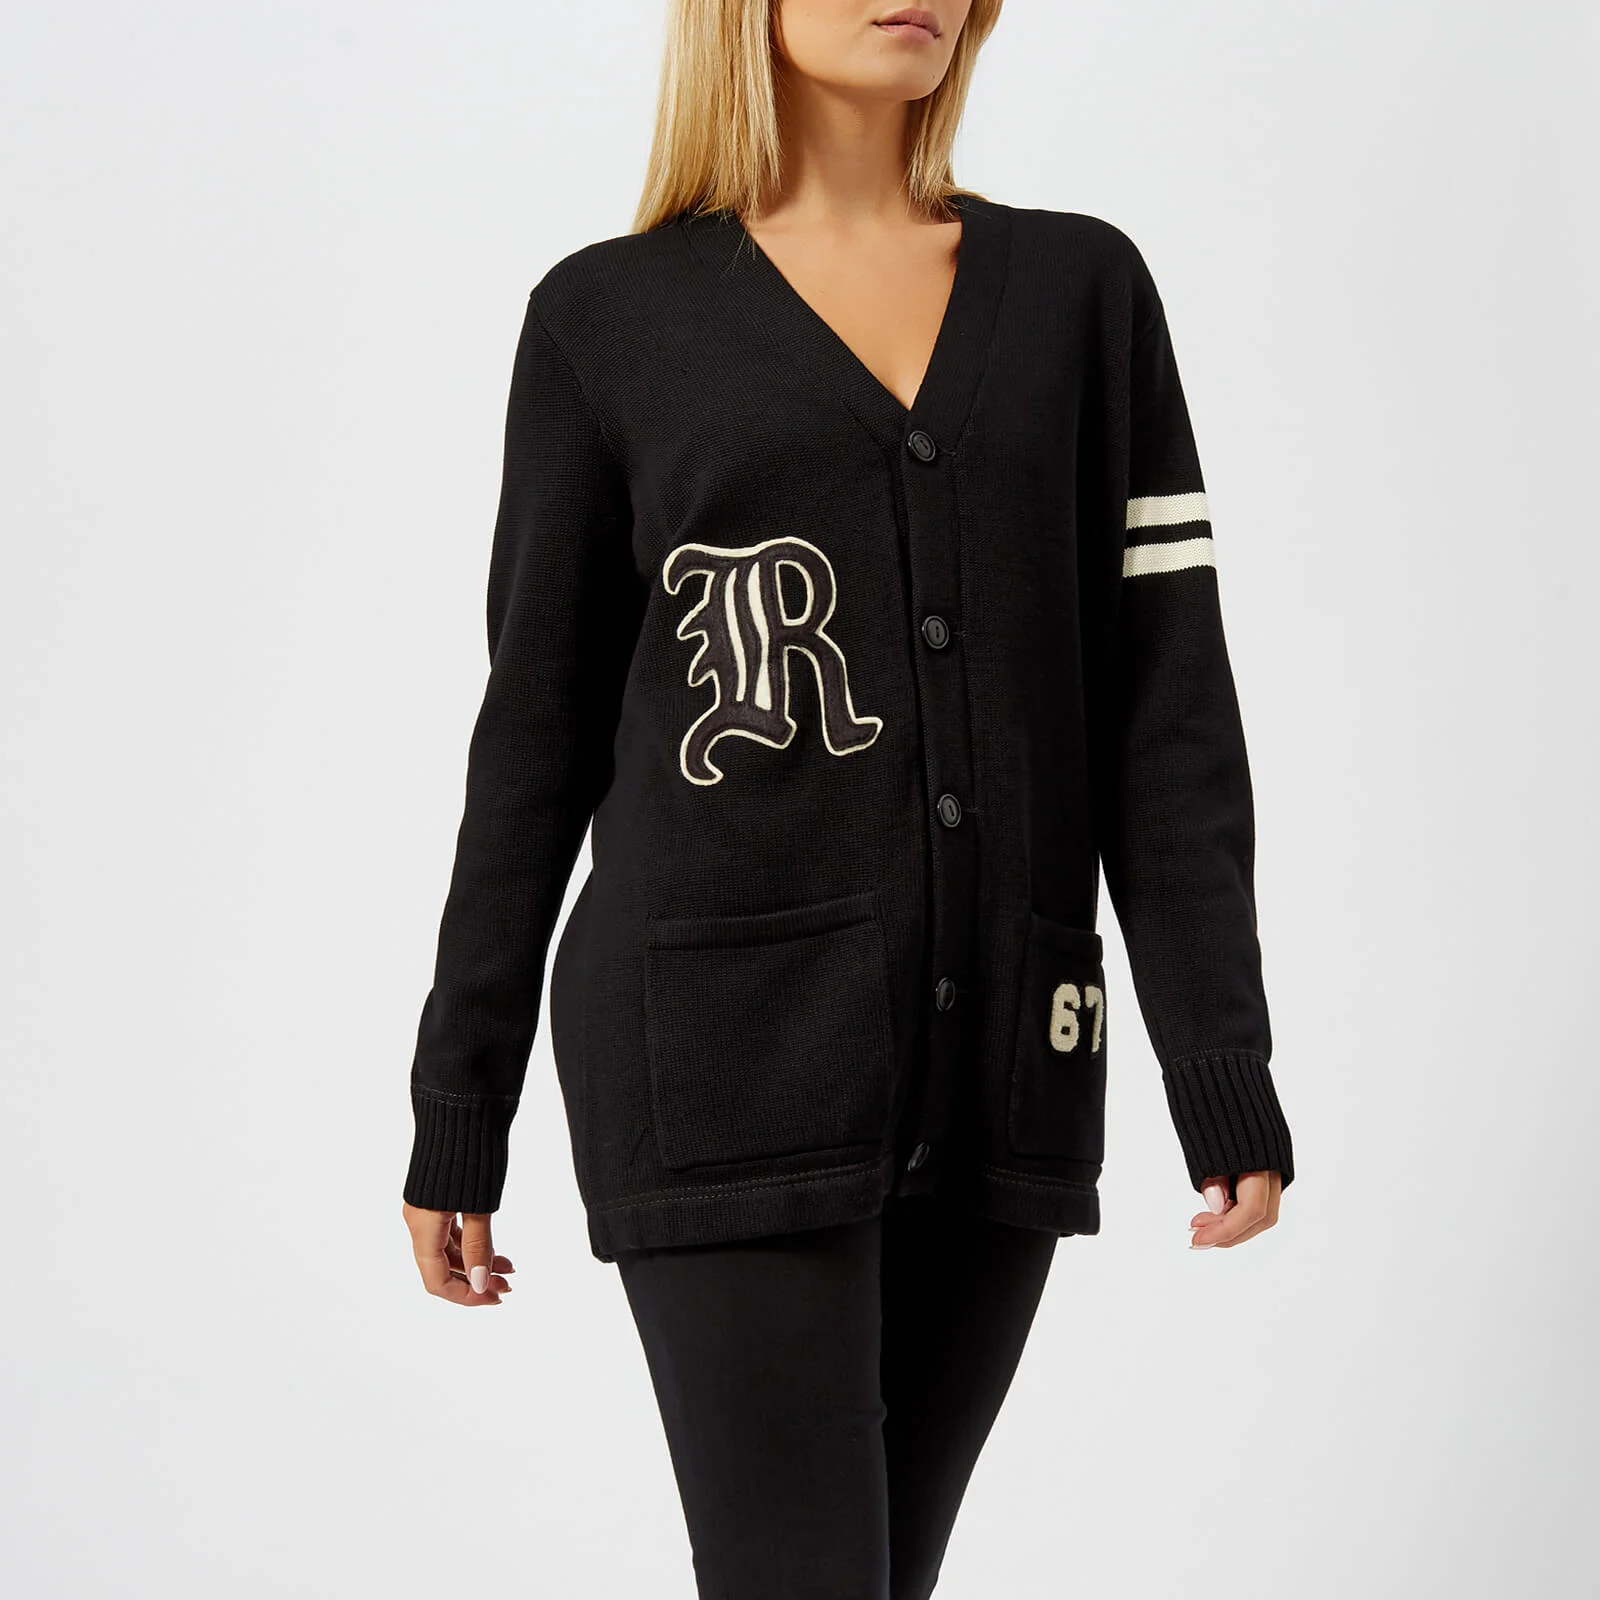 Polo Ralph Lauren Women's Varsity Cardigan - Black/Cream Image 1